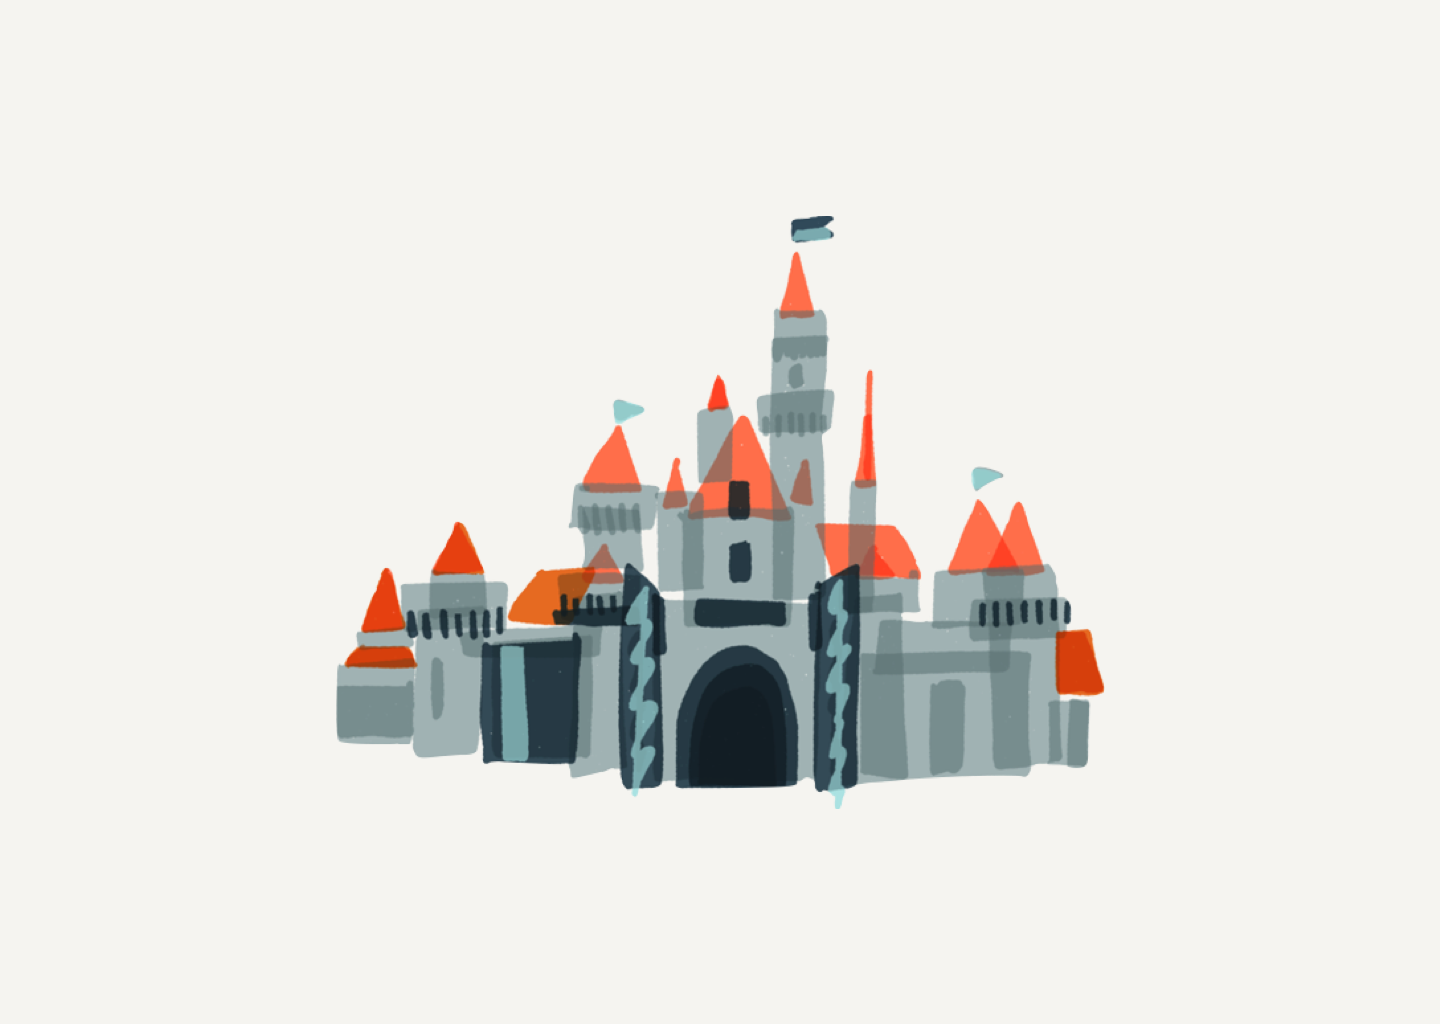 Sketch of a castle